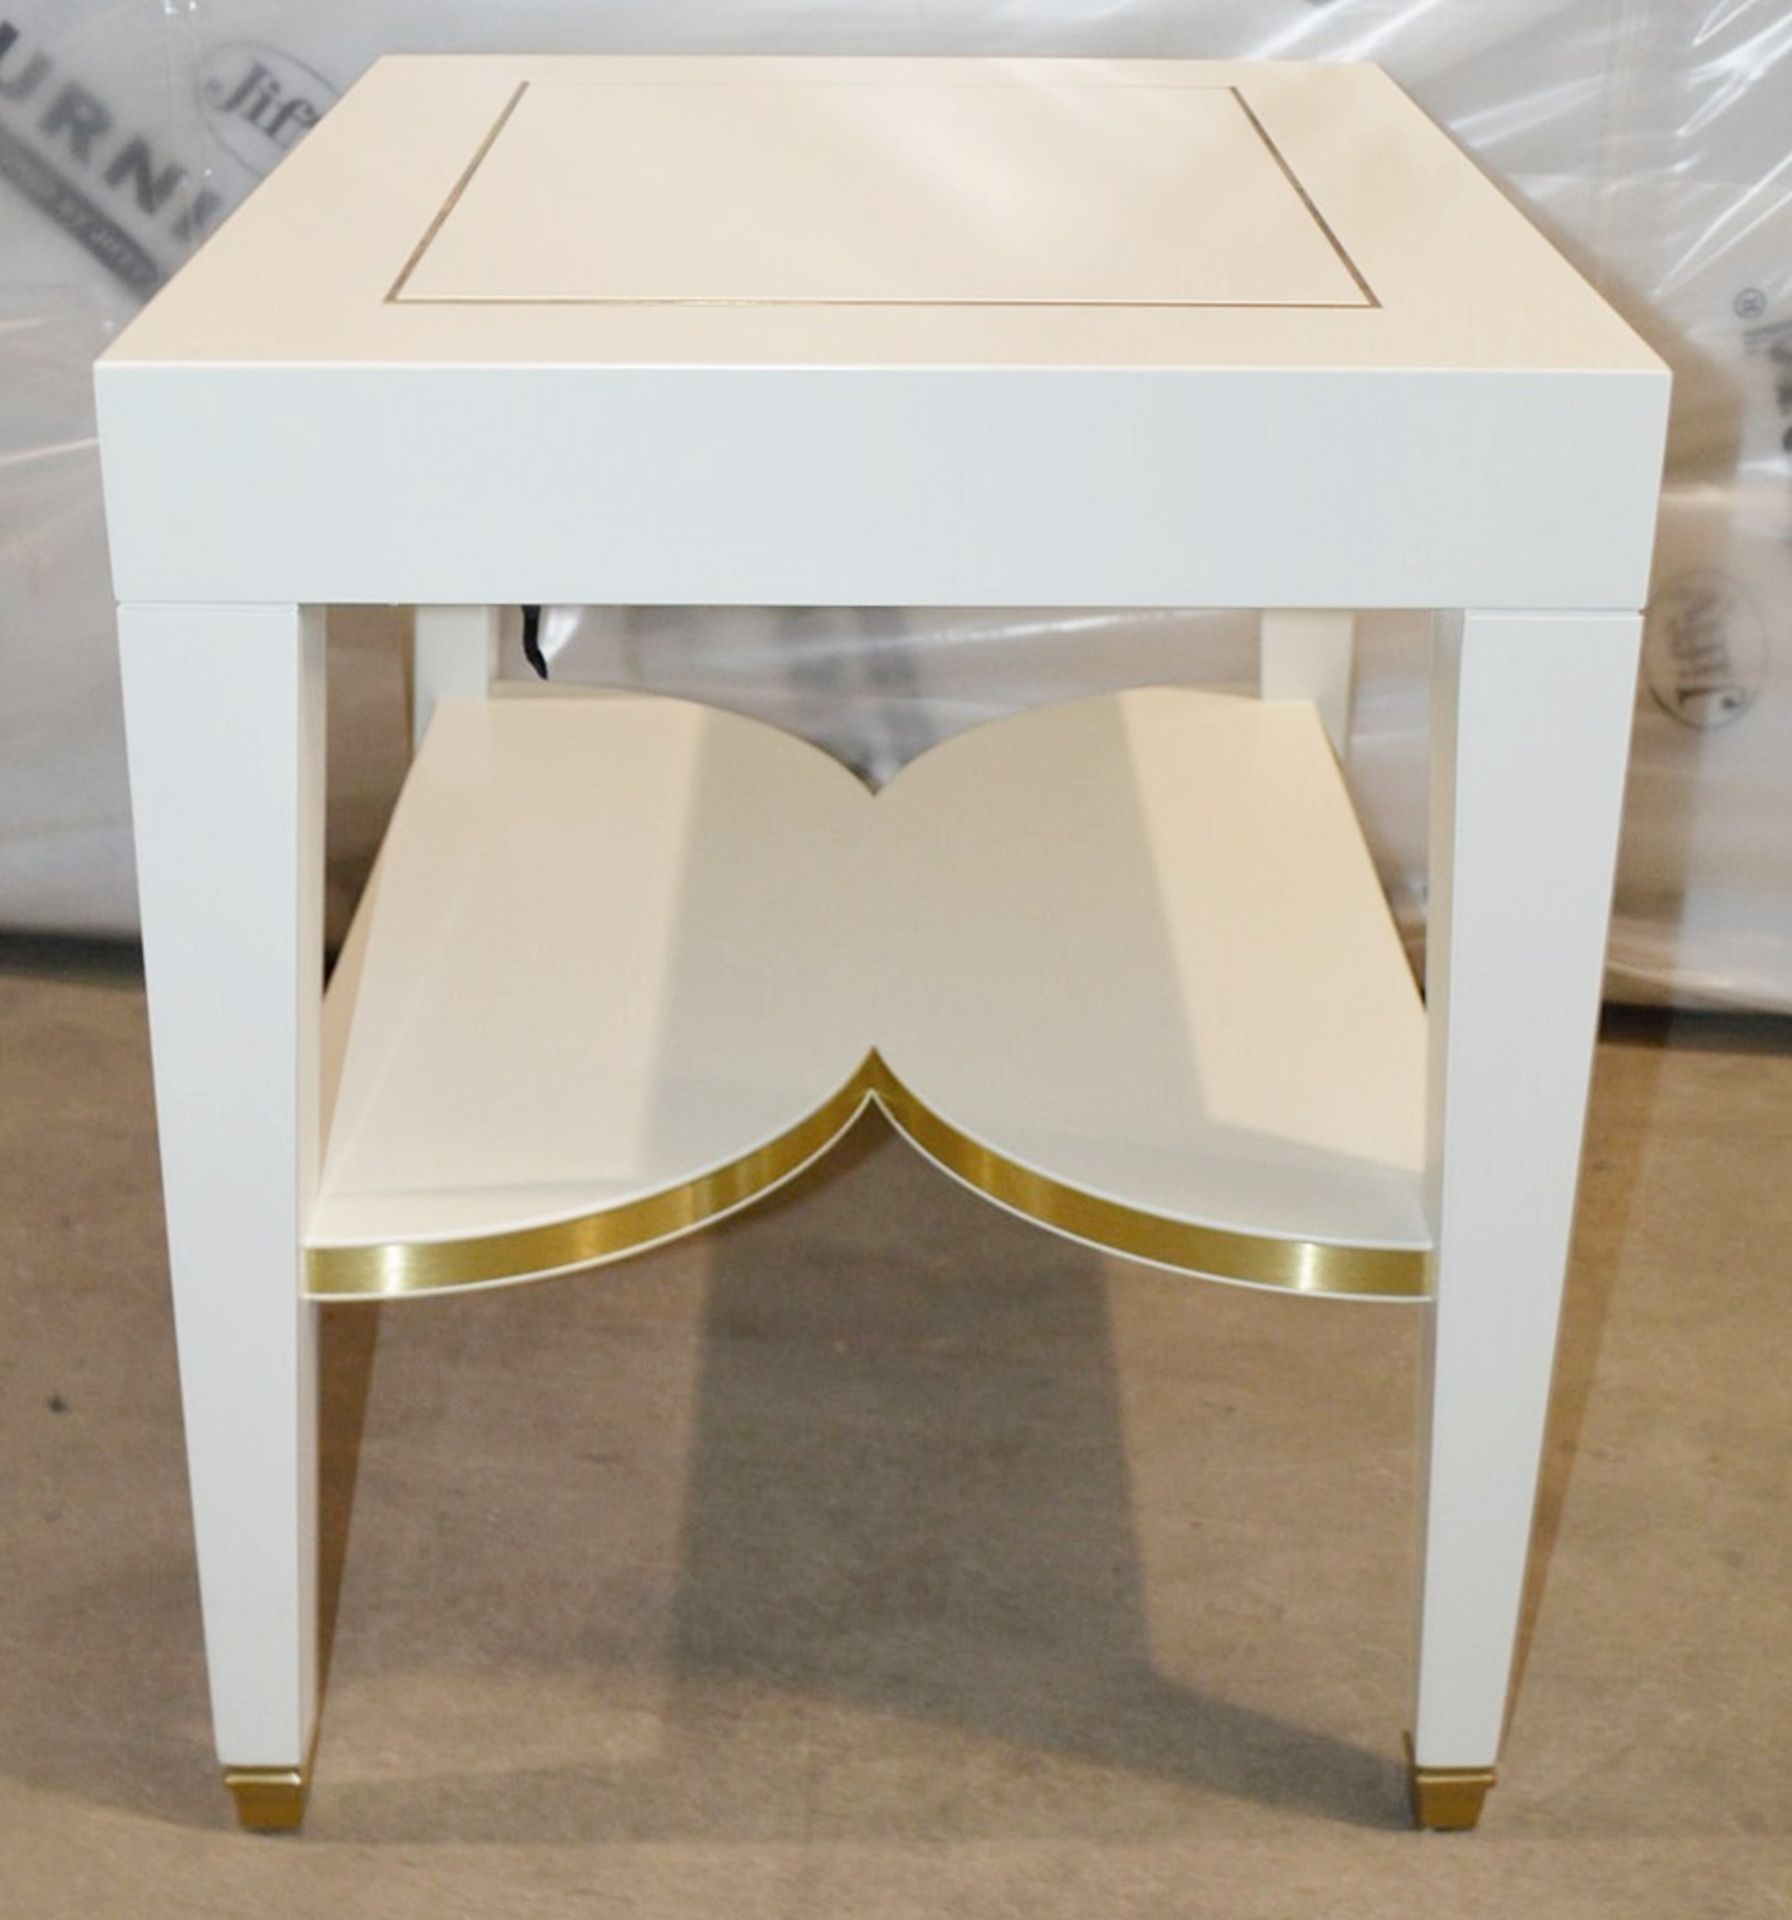 1 x JUSTIN VAN BREDA 'Alexander' Mahogany Occasional Side Table In Cream - Dimensions: W60 x D50 x H